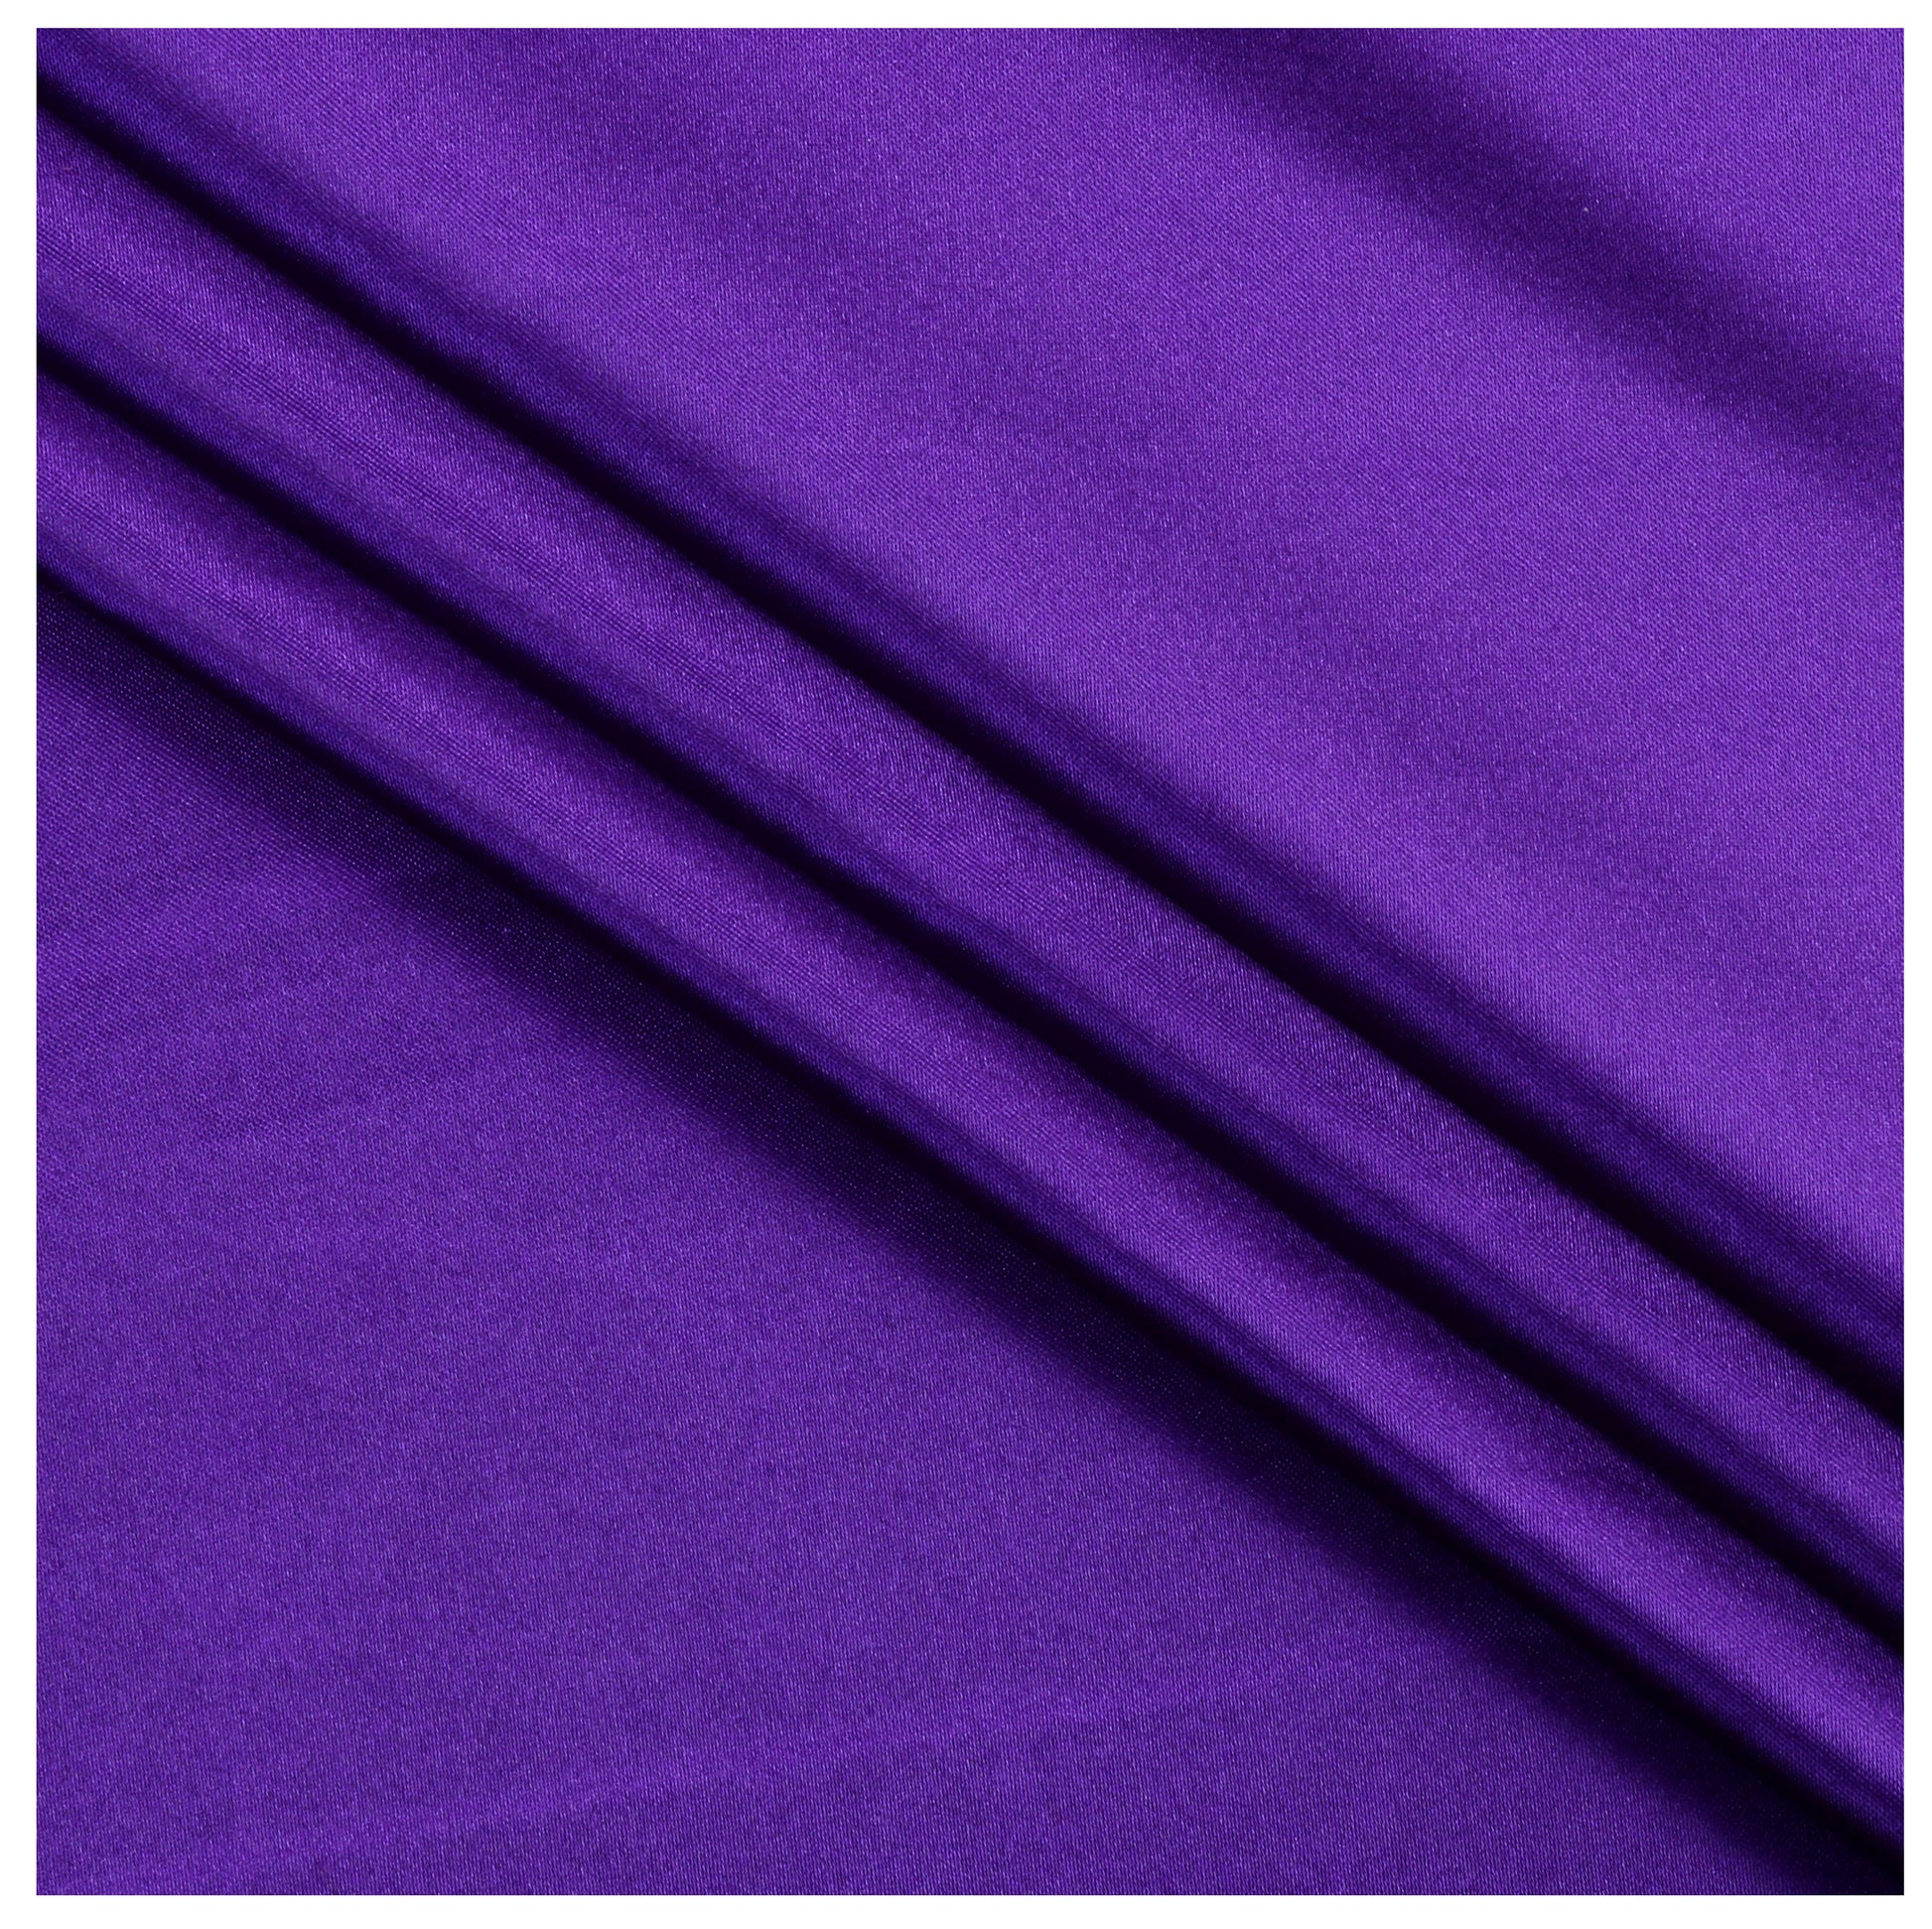 Cadbury Purple,7cb82f2c-4804-4126-b378-2a751289c4b7